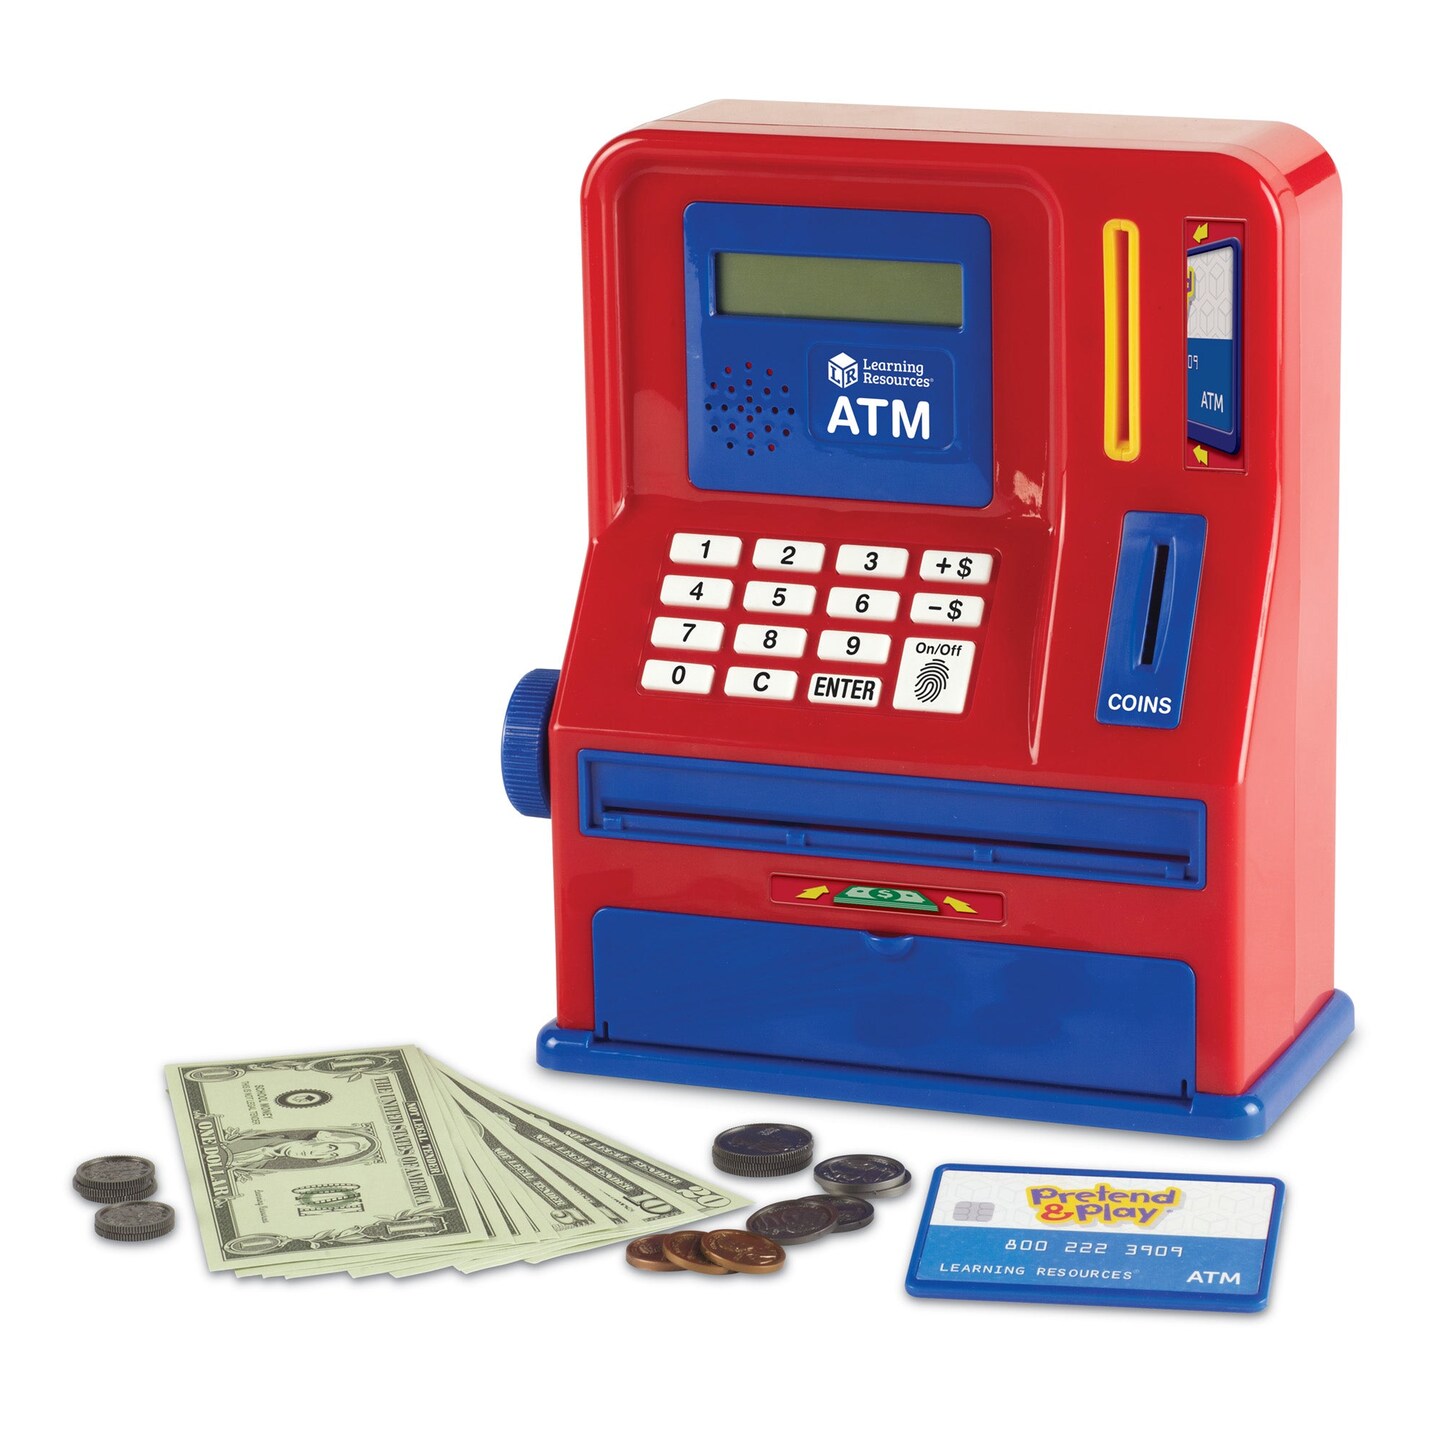 Pretend and Play&#xAE; Teaching ATM Bank